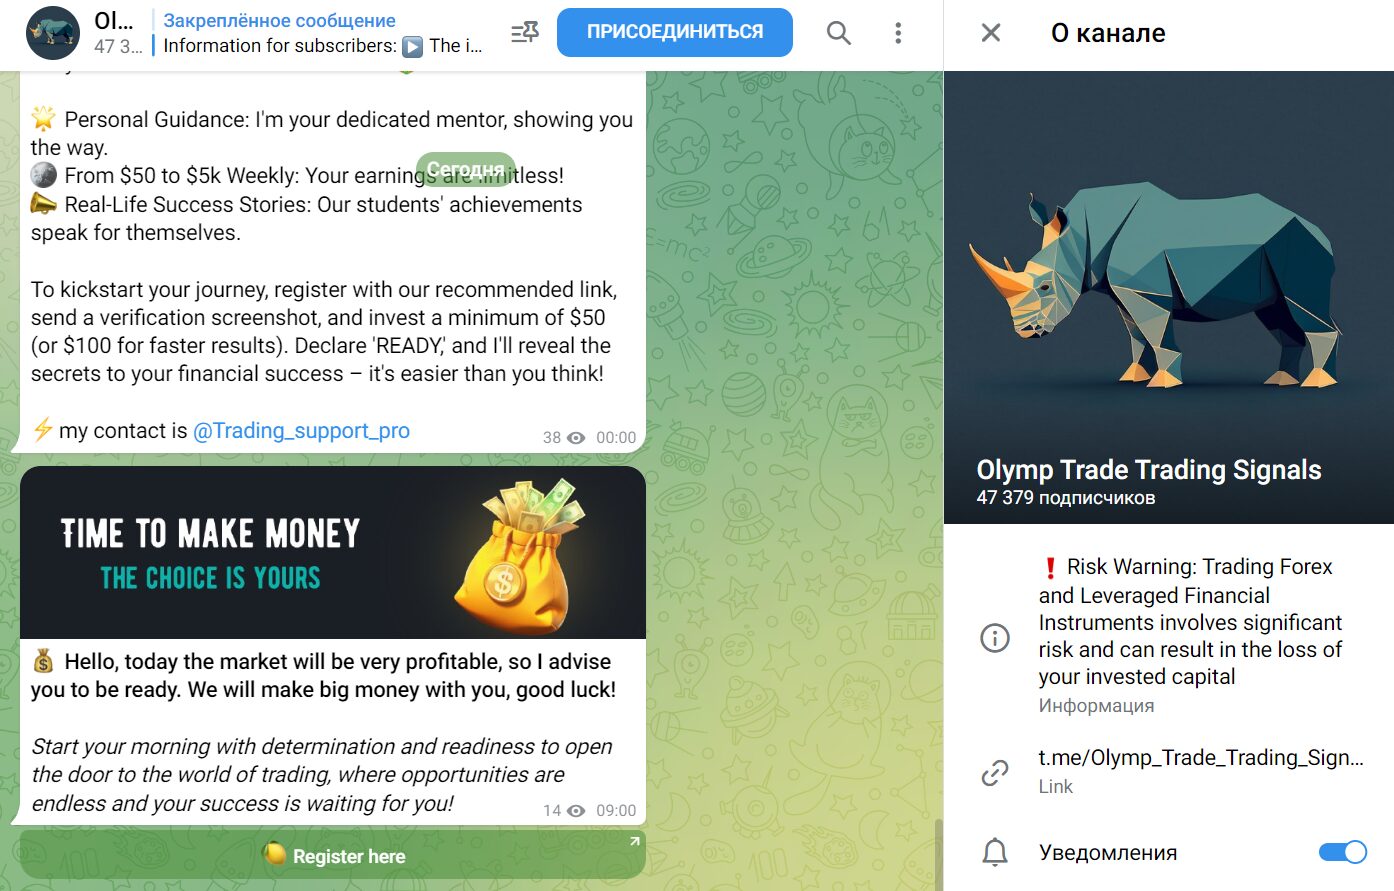 Olymp Trade Trading Signals в Телеграм